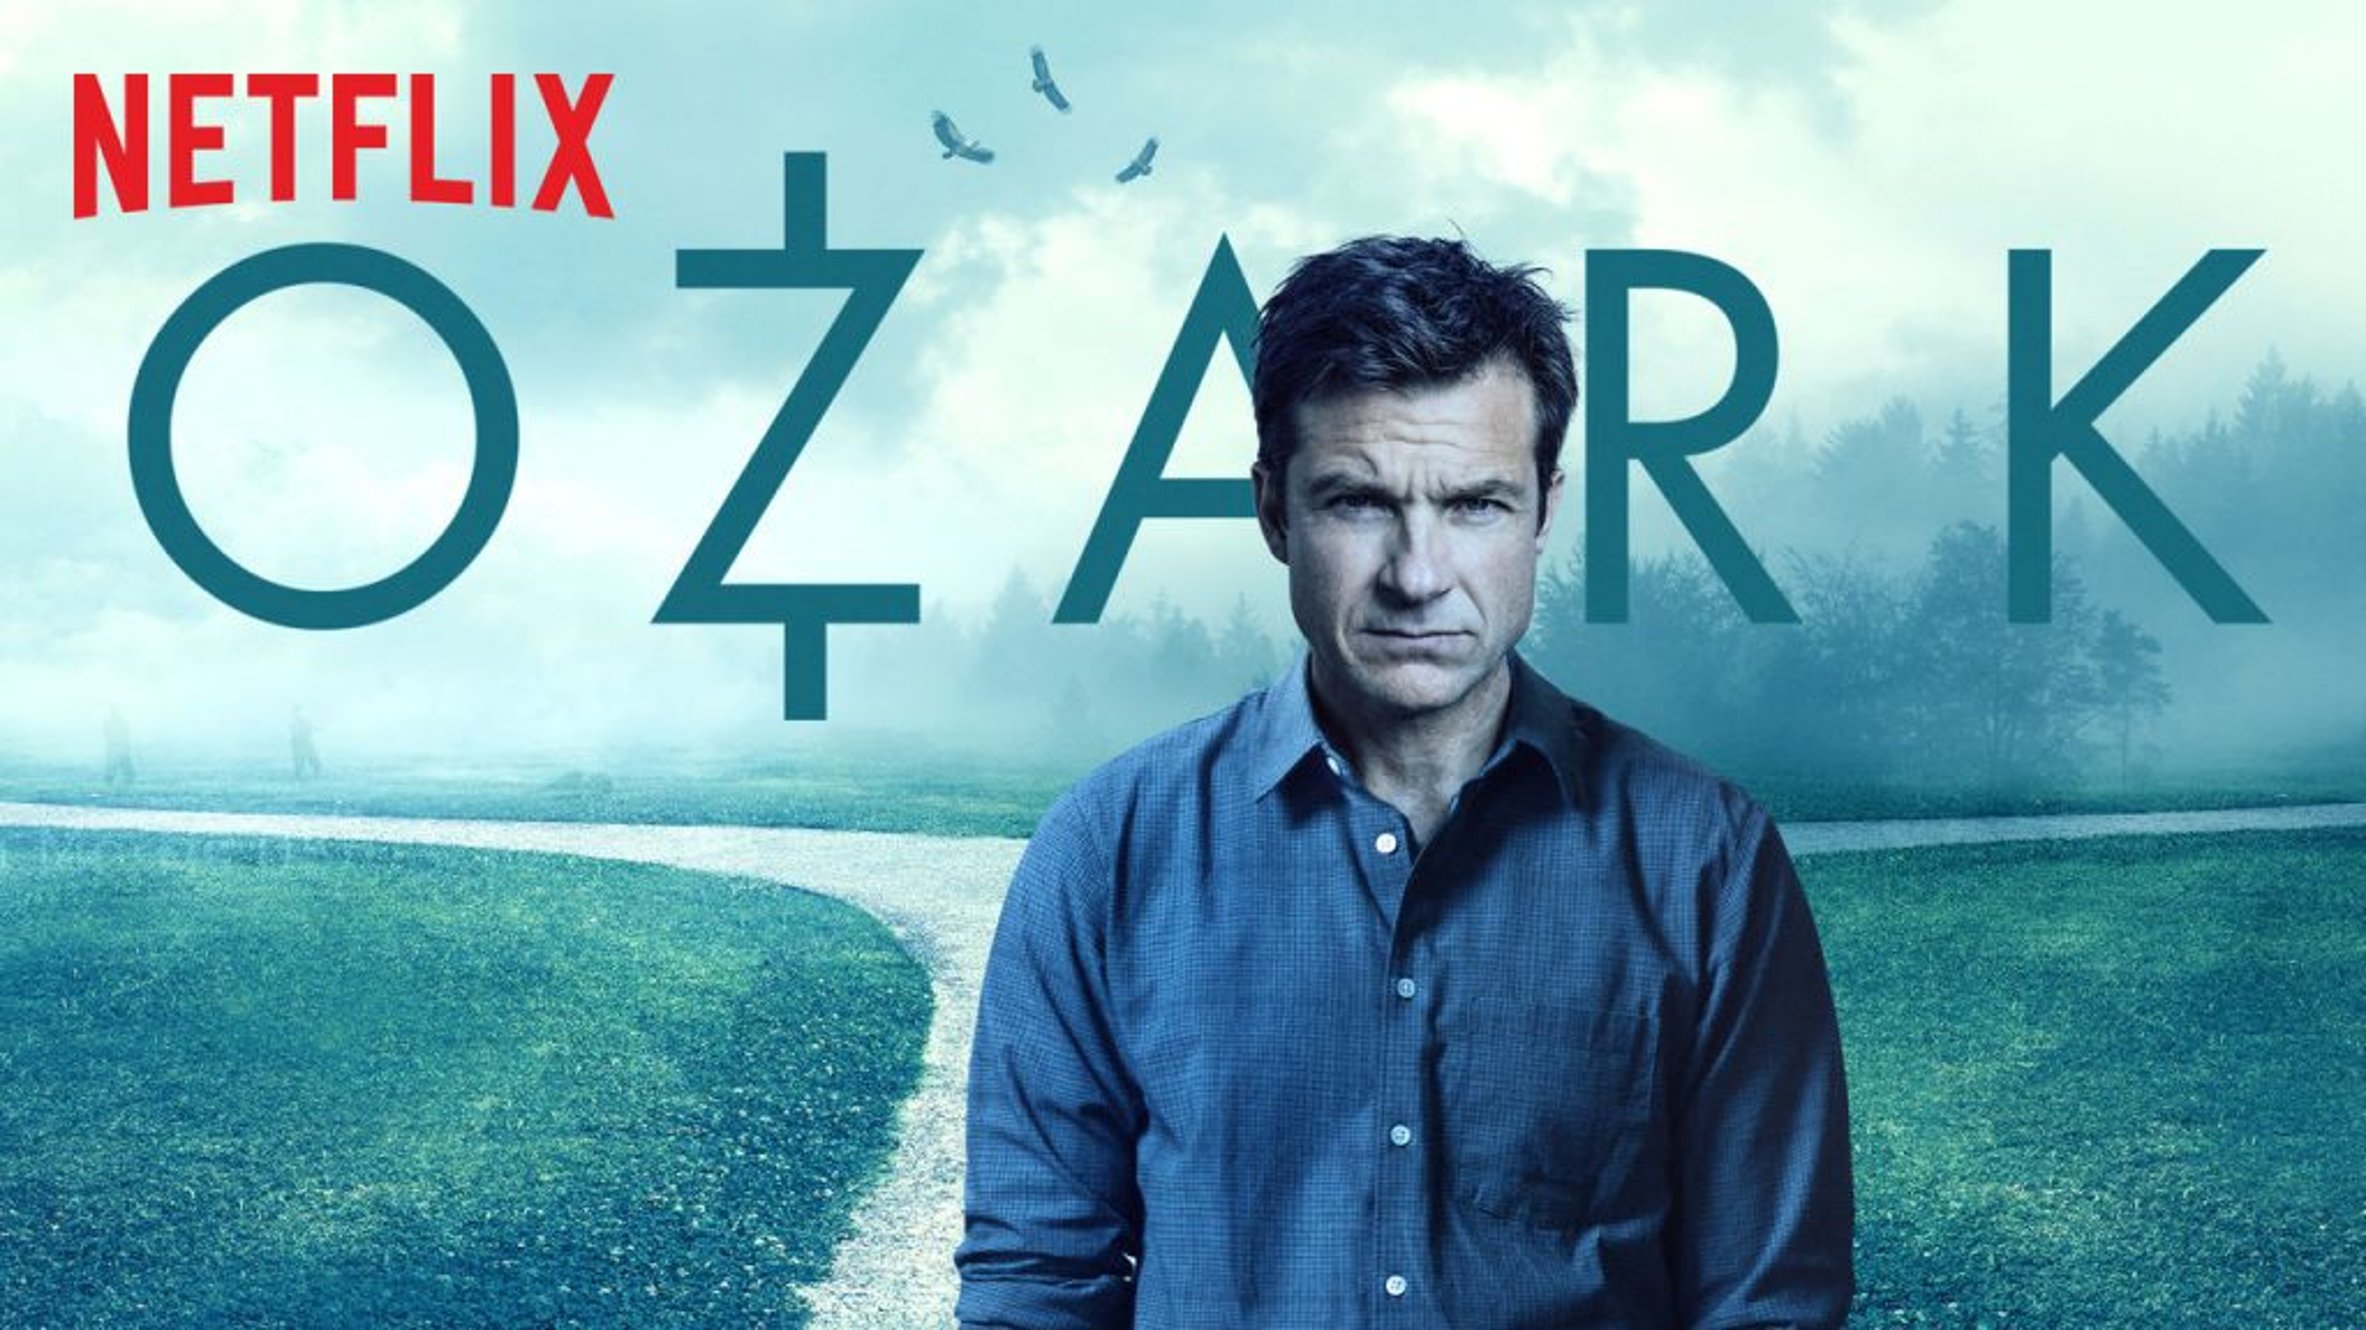 Netflix's Ozark - OVERNIGHT CASTING!